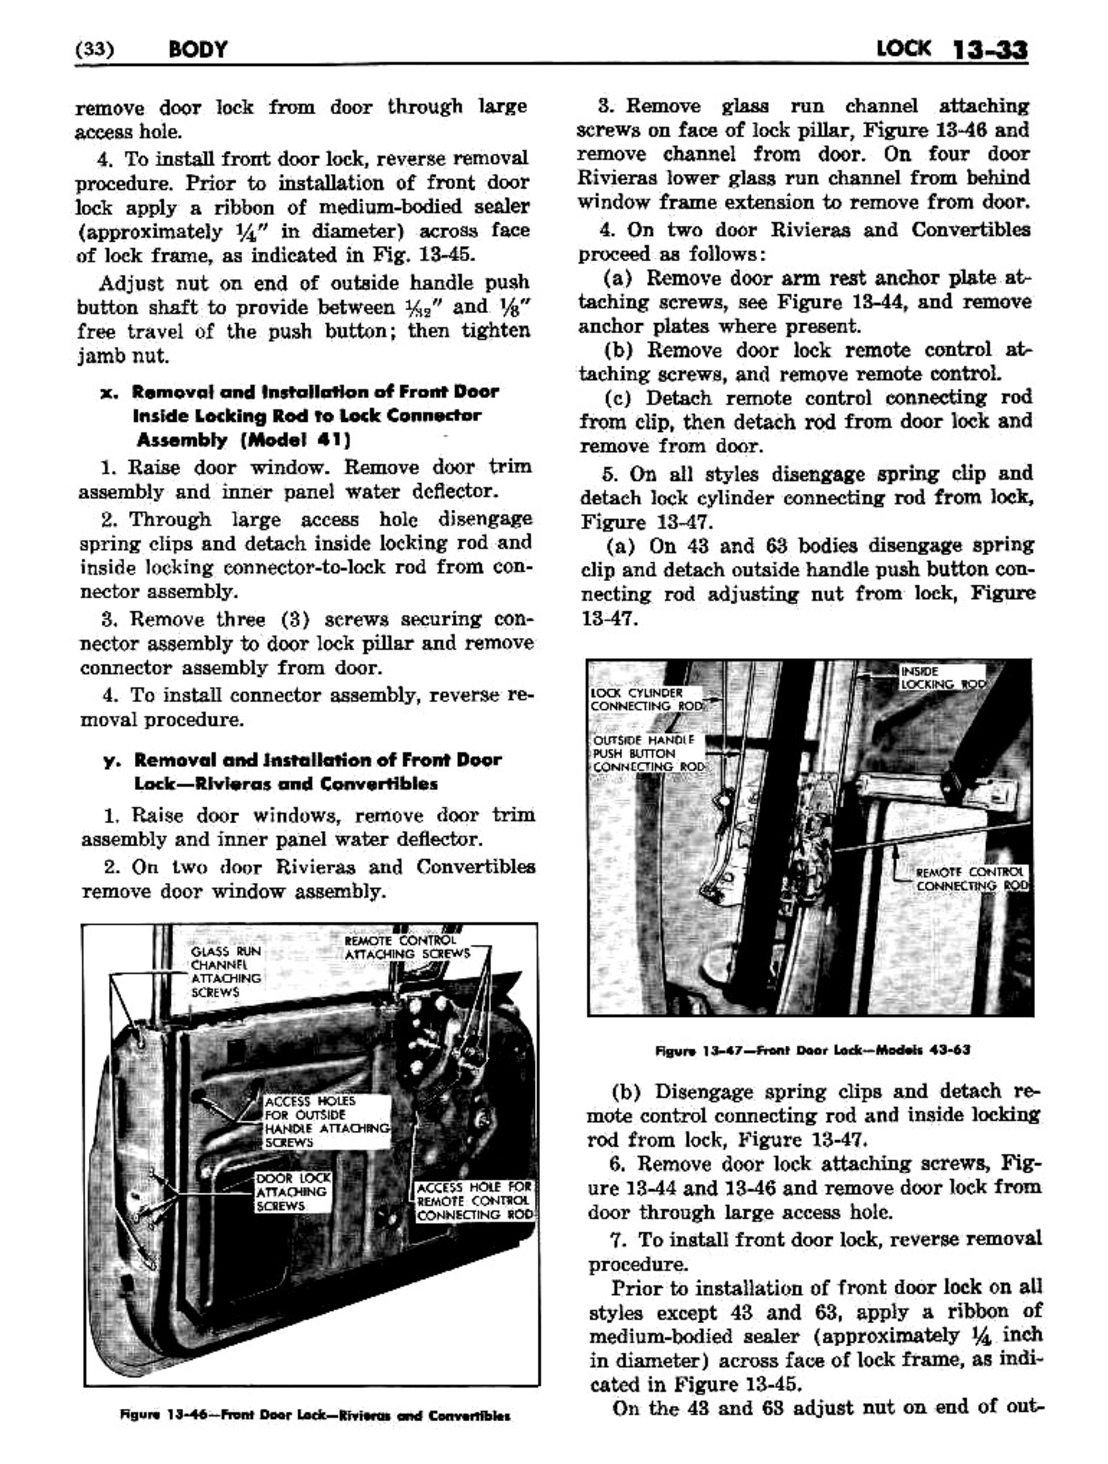 n_1957 Buick Body Service Manual-035-035.jpg